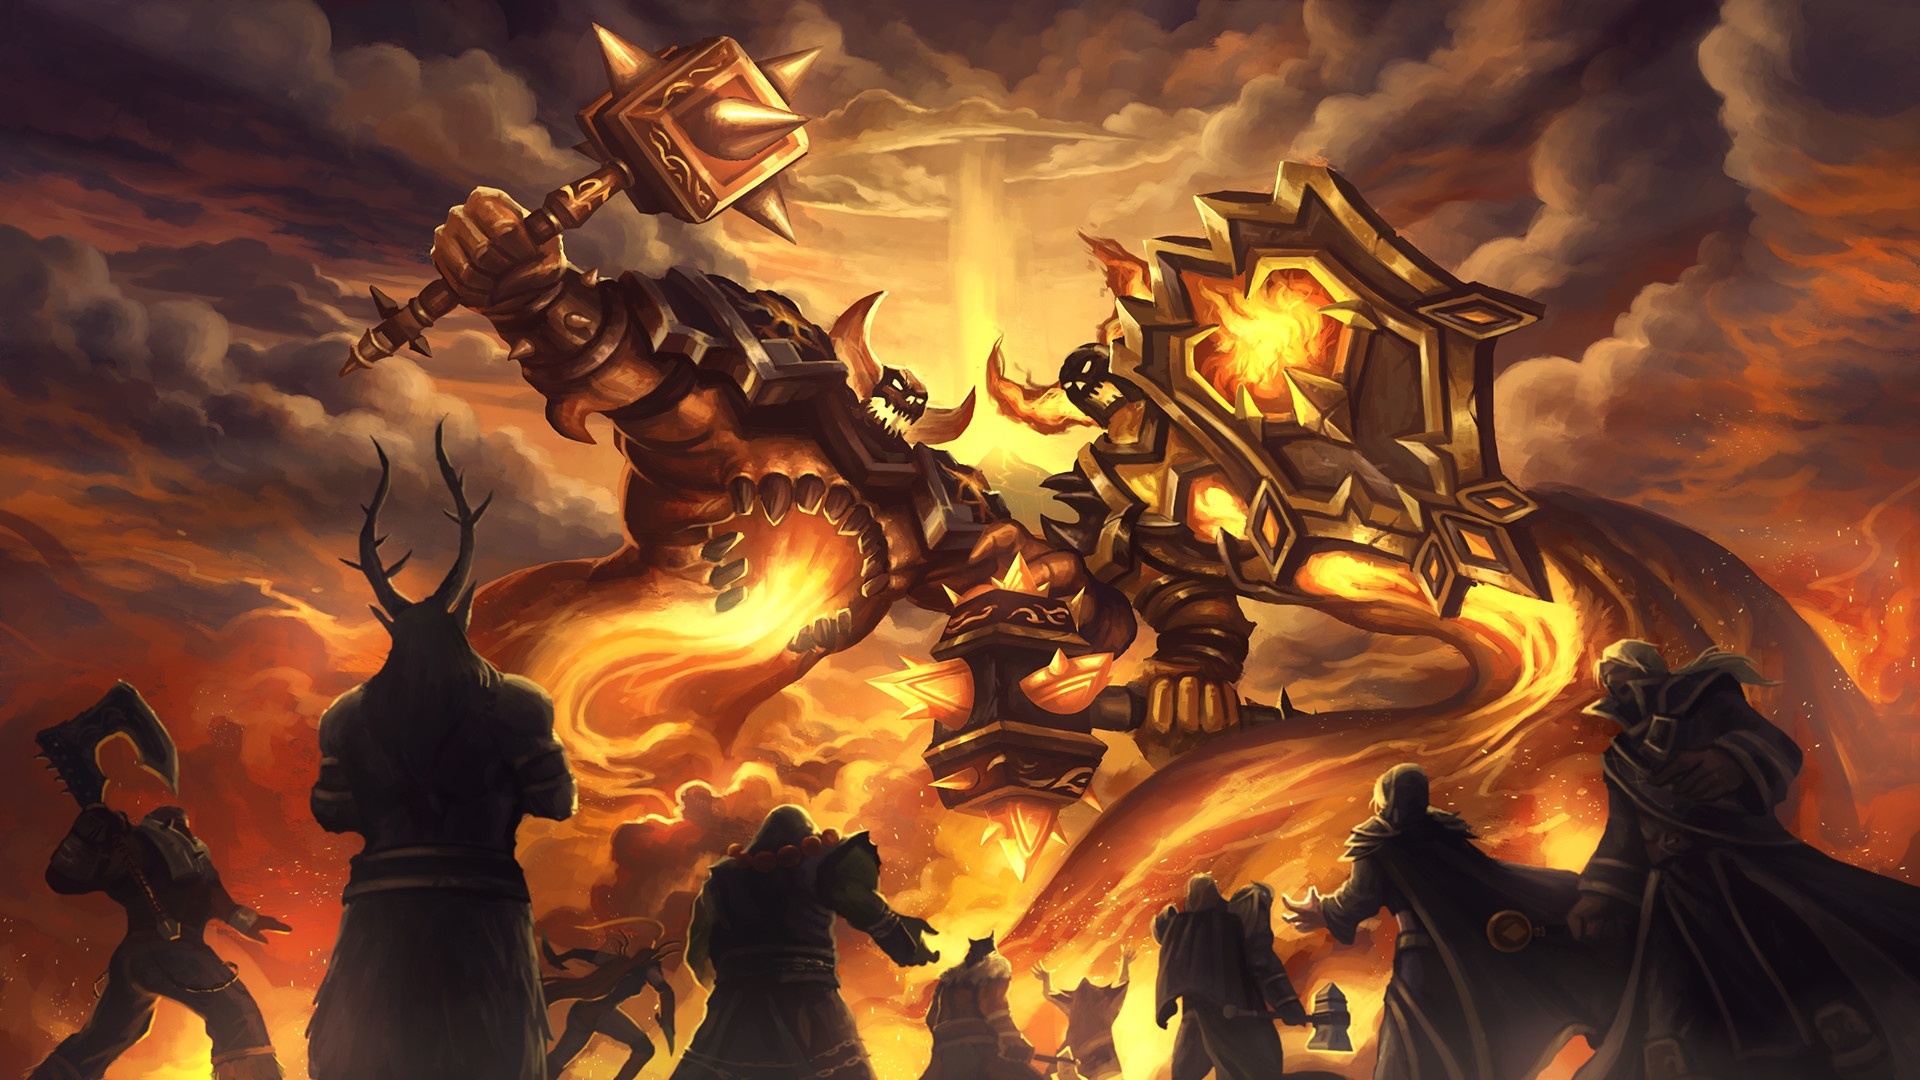 General 1920x1080 video games Warcraft World of Warcraft Hearthstone Ragnaros Gorehowl fire digital art artwork fantasy art